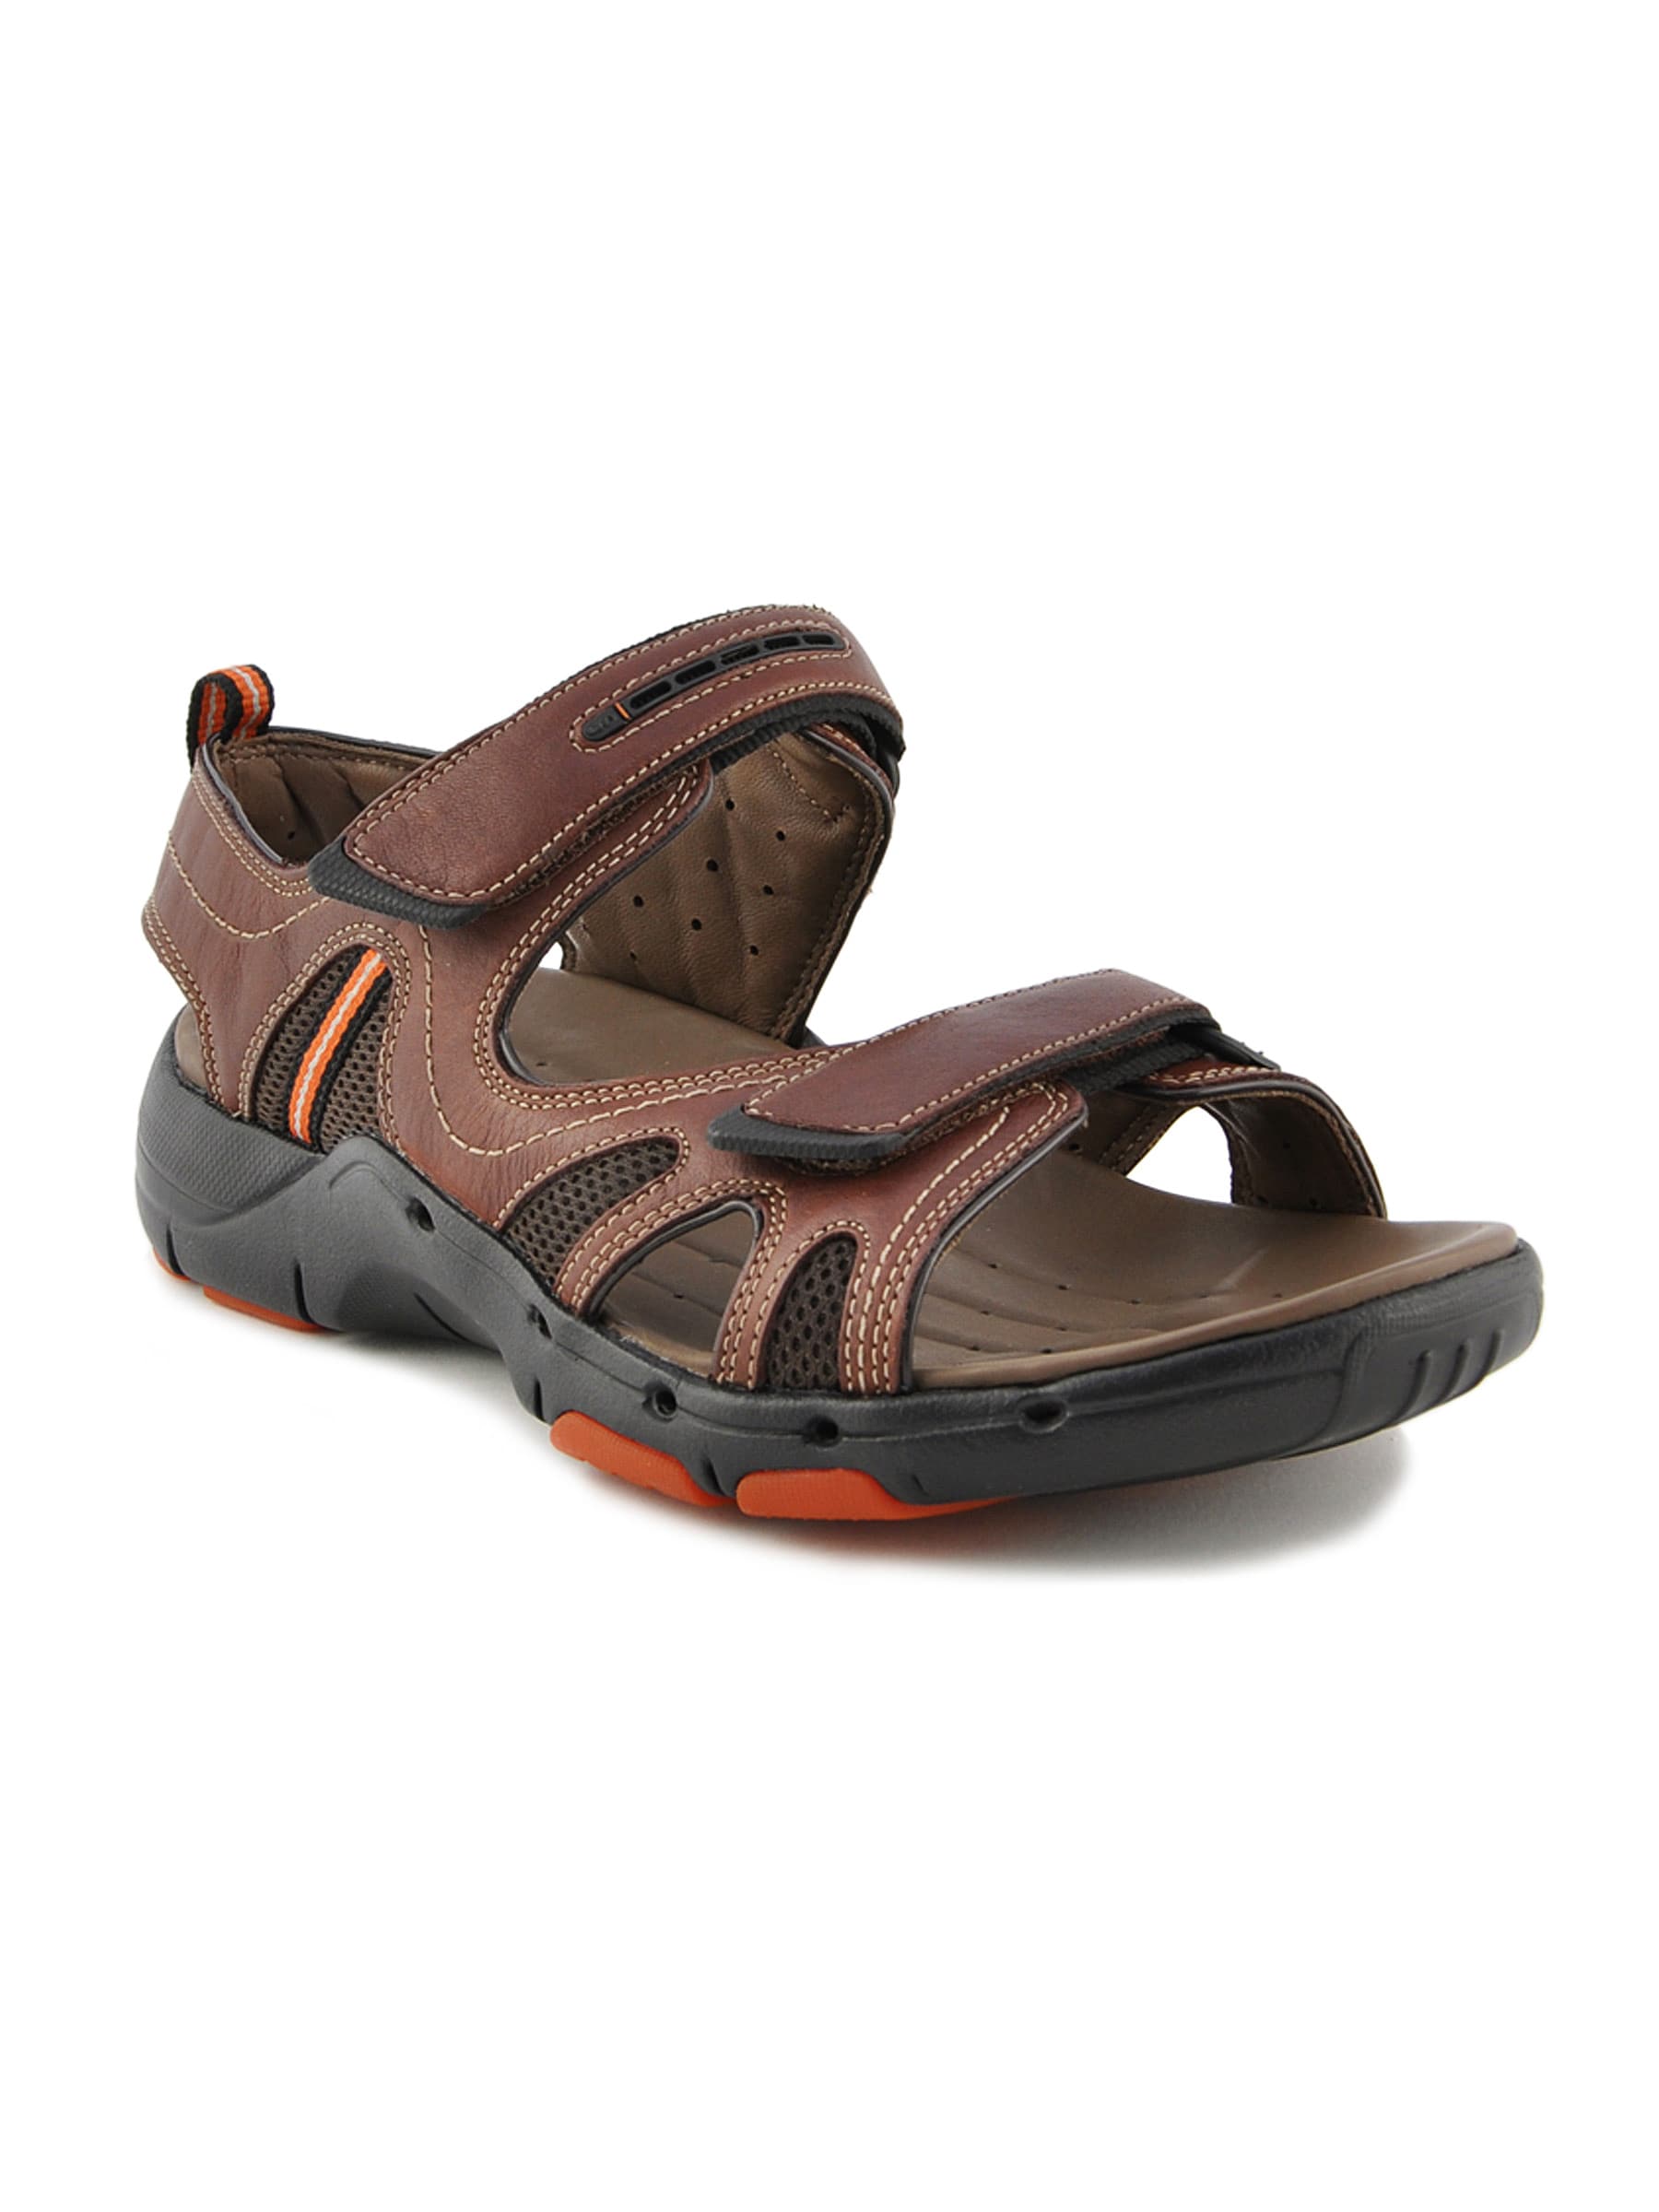 Clarks Men Unstructured Leather Brown Sandals